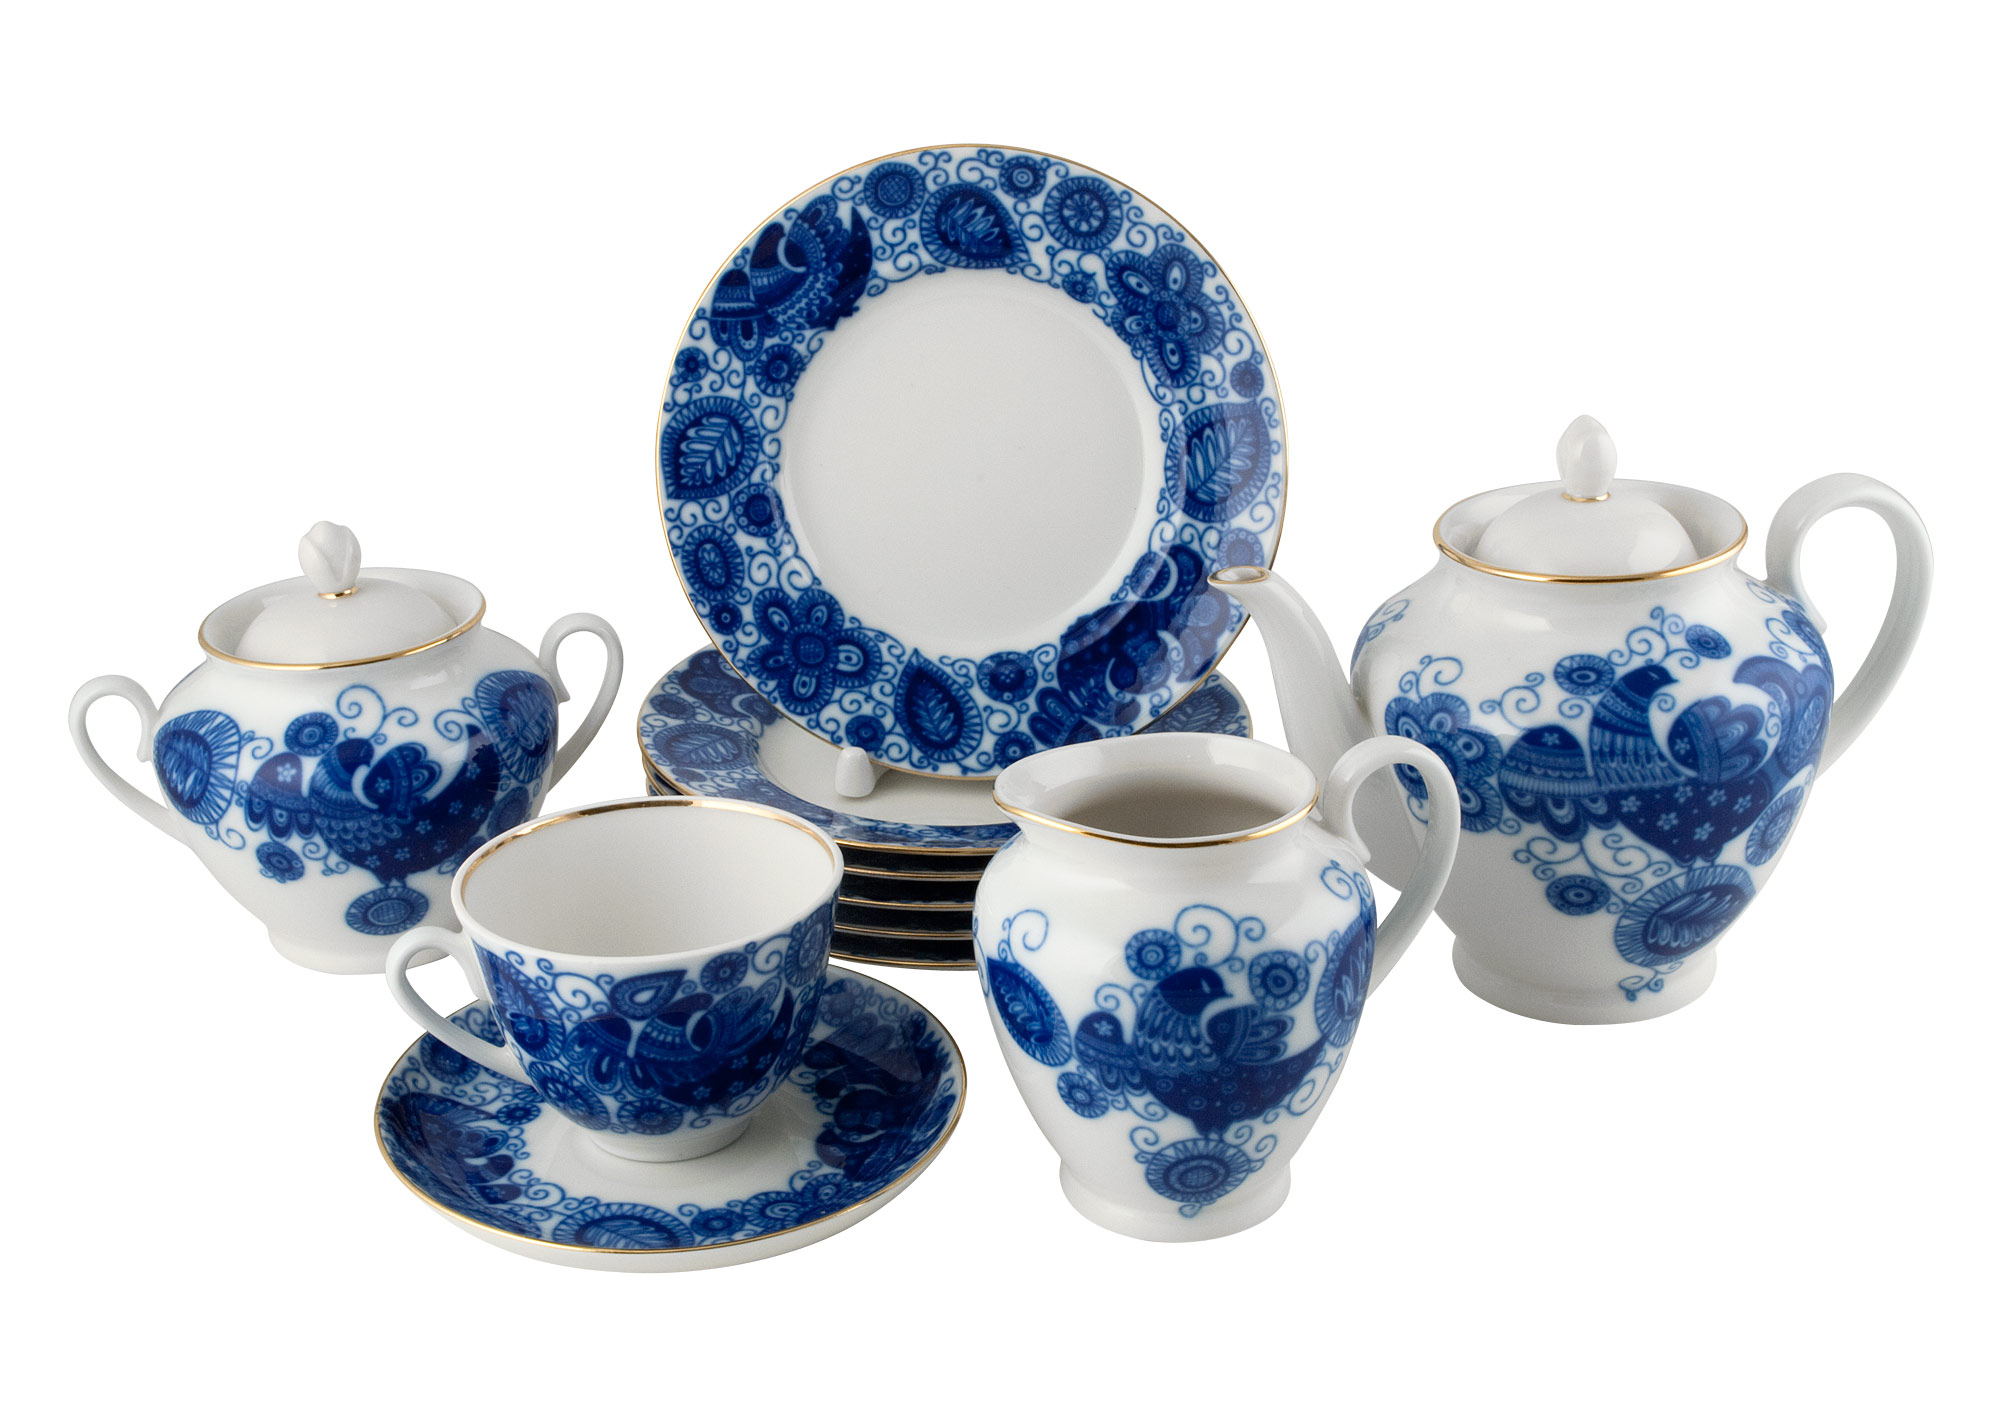 Buy Cobalt Lace Tea Set 15 pc. at GoldenCockerel.com